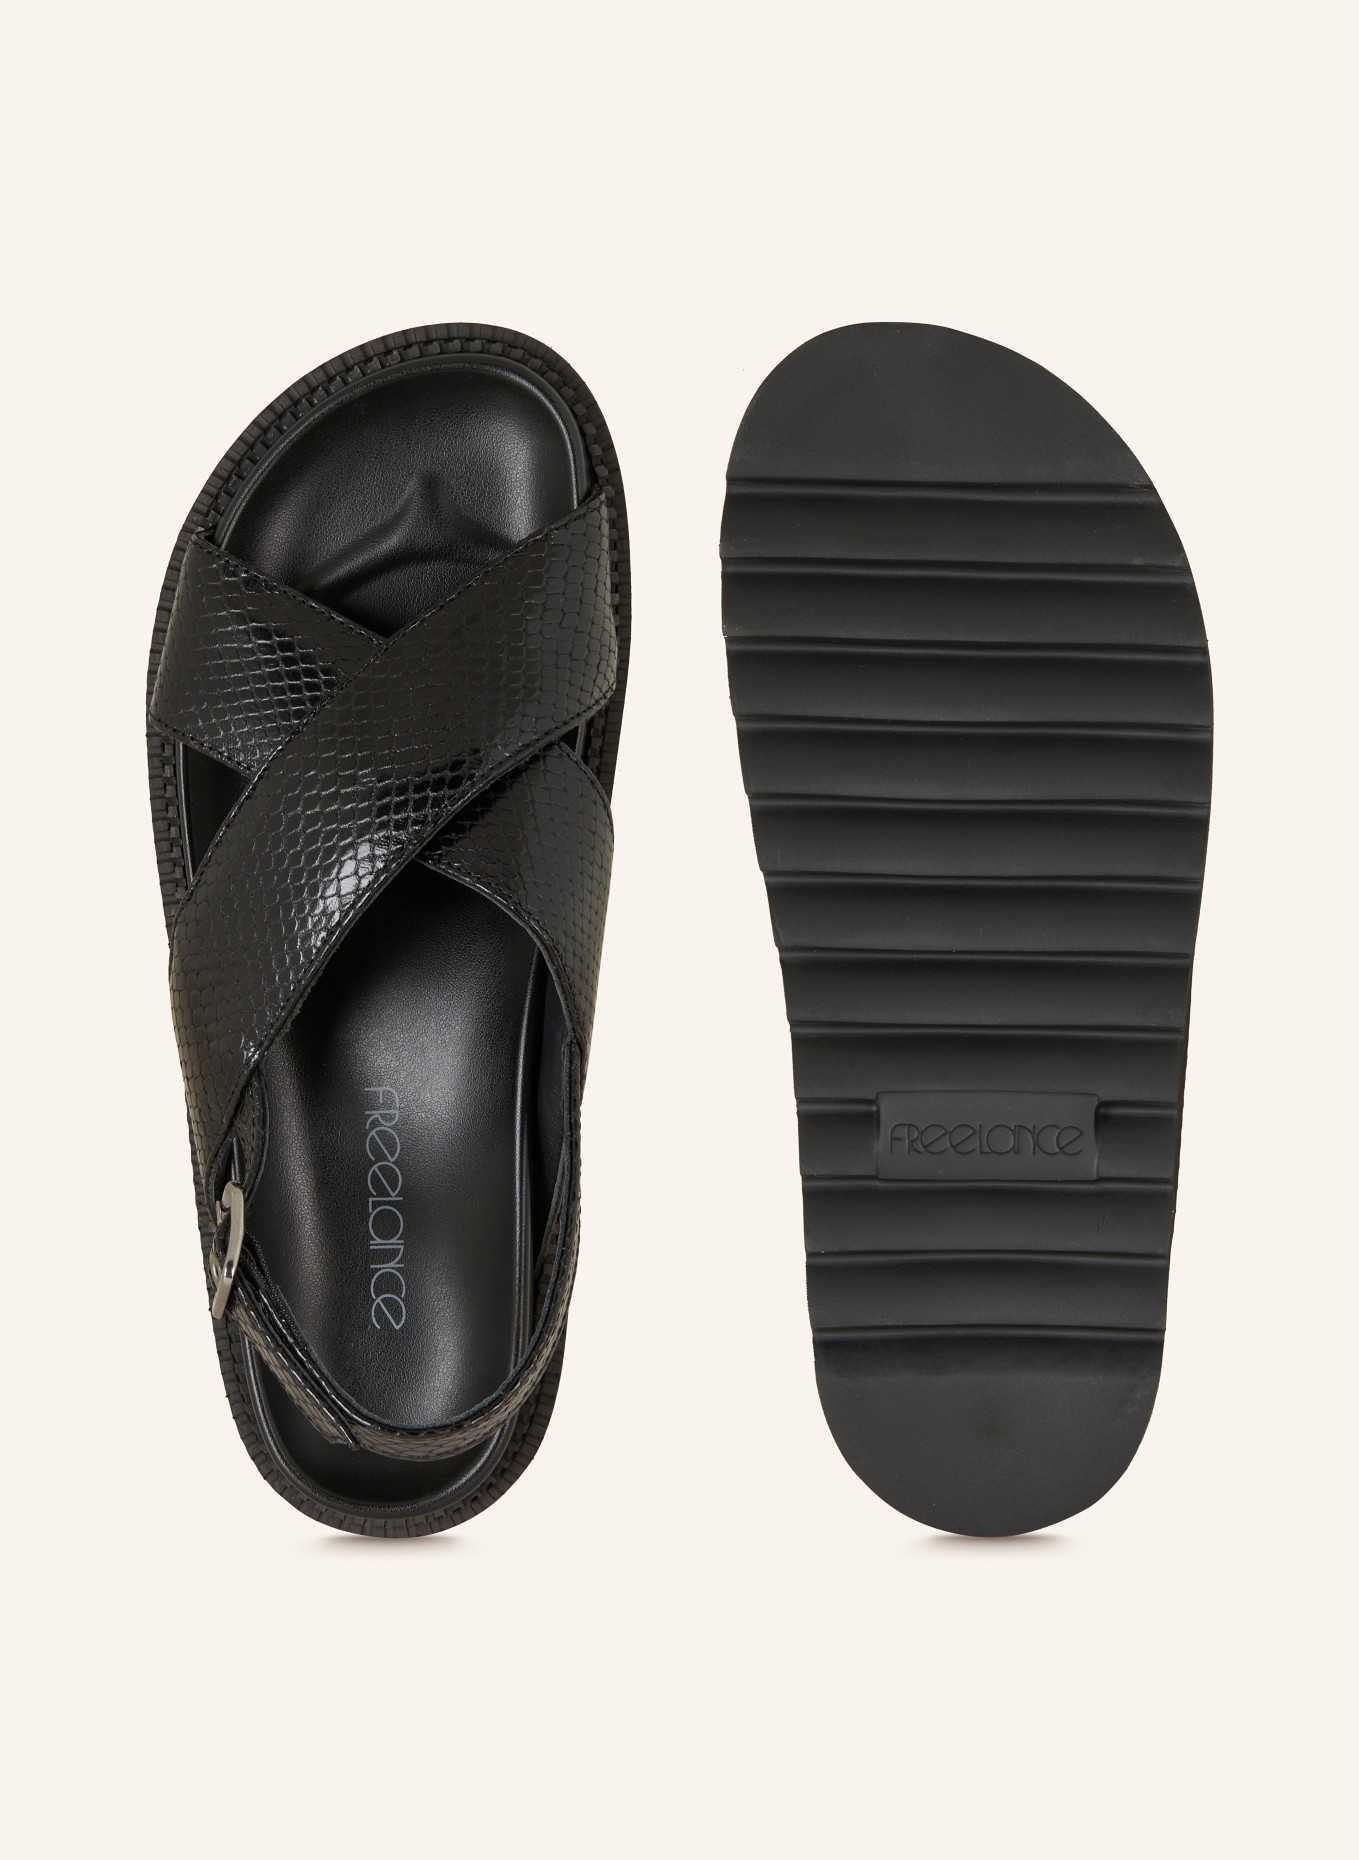 FREE LANCE Sandals TRINITY, Color: BLACK (Image 5)